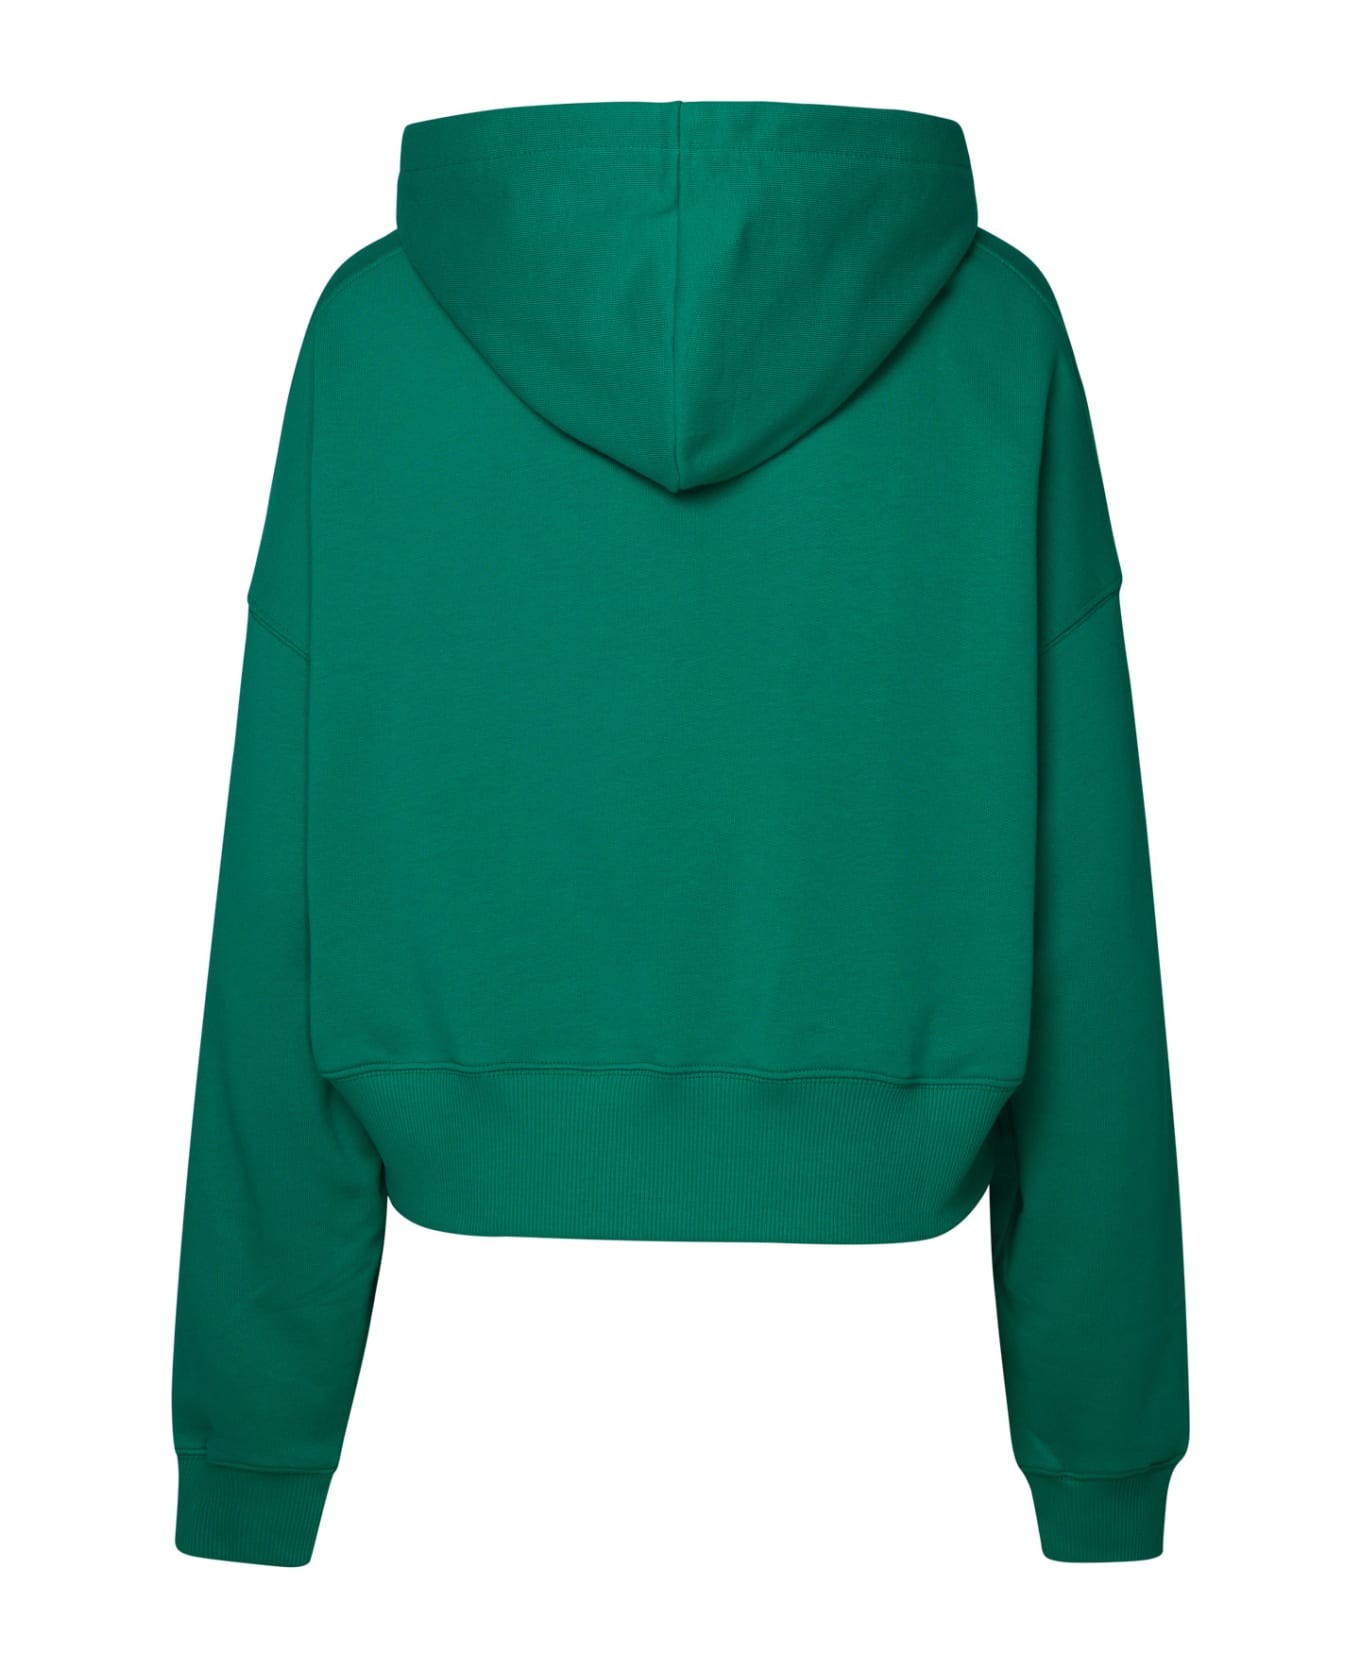 MSGM Green Cotton Sweatshirt - Green フリース